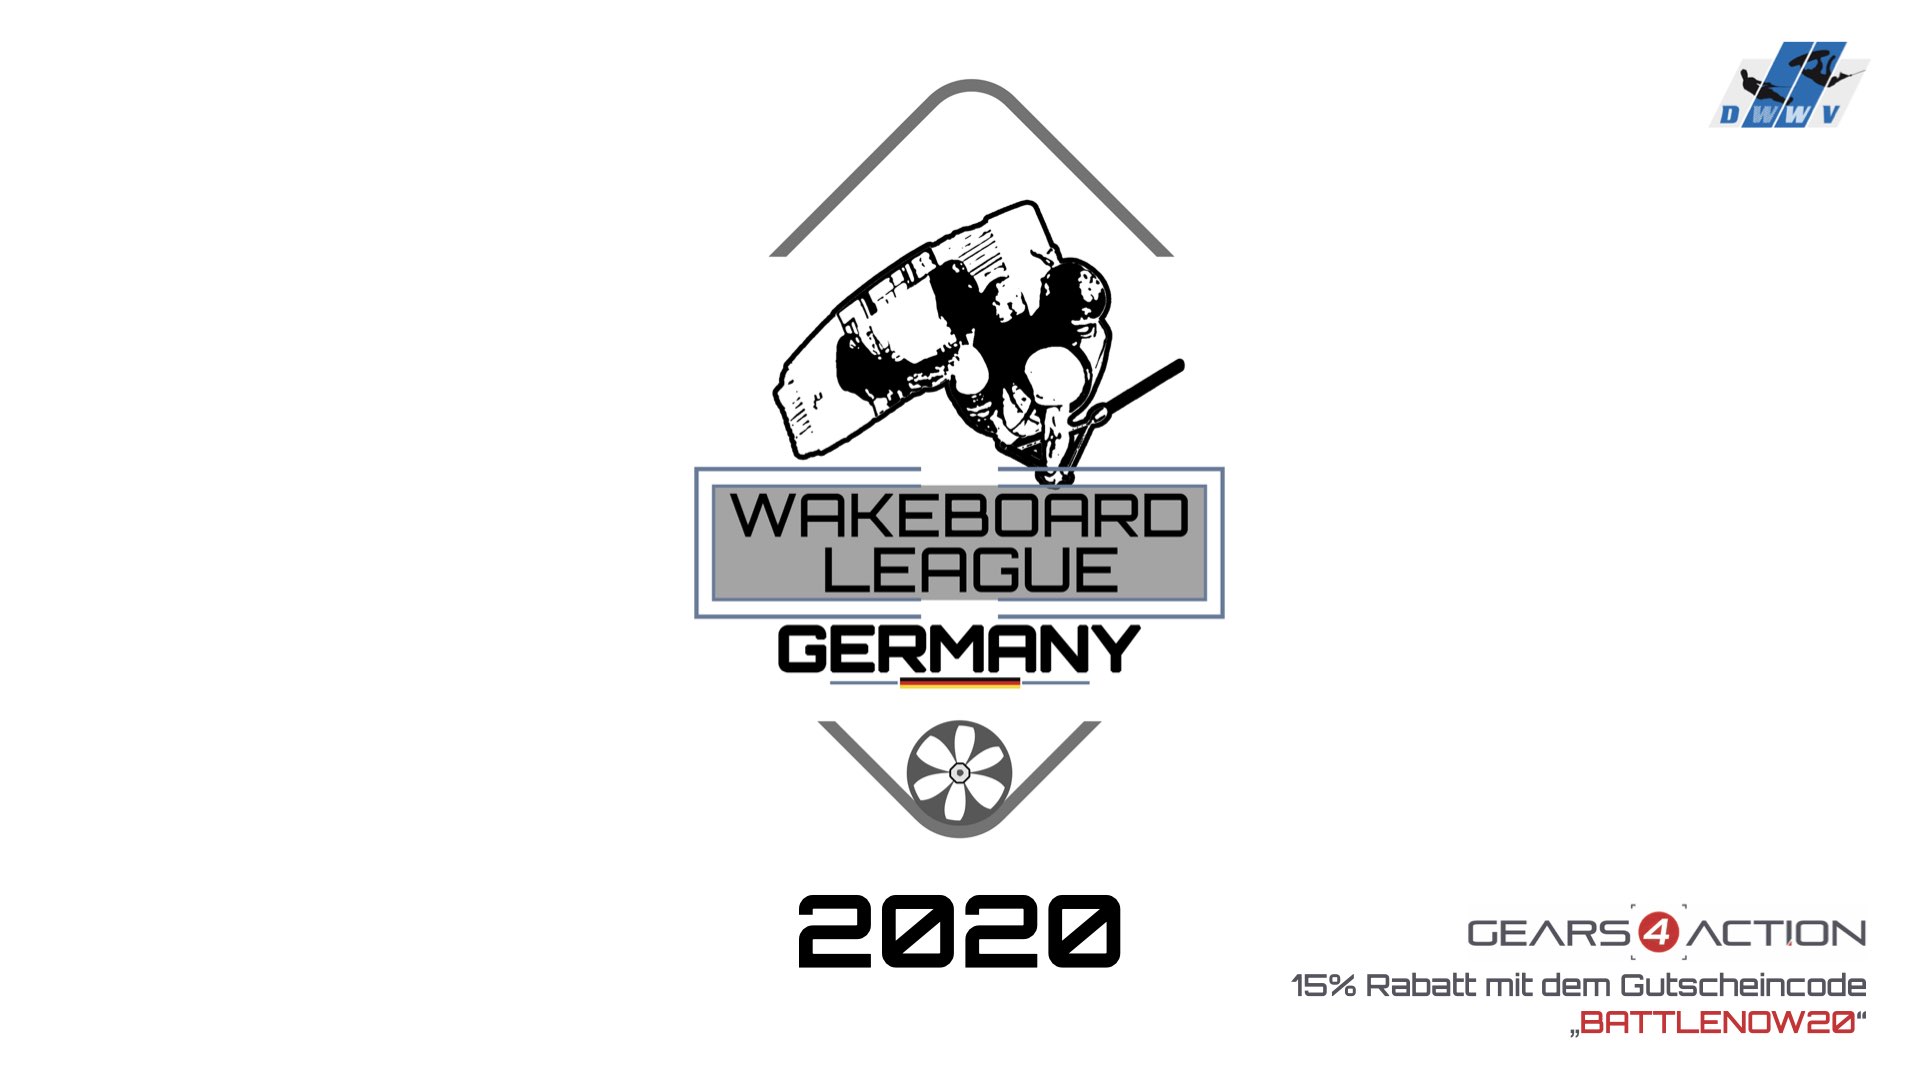 Wakeboard League Germany 2020